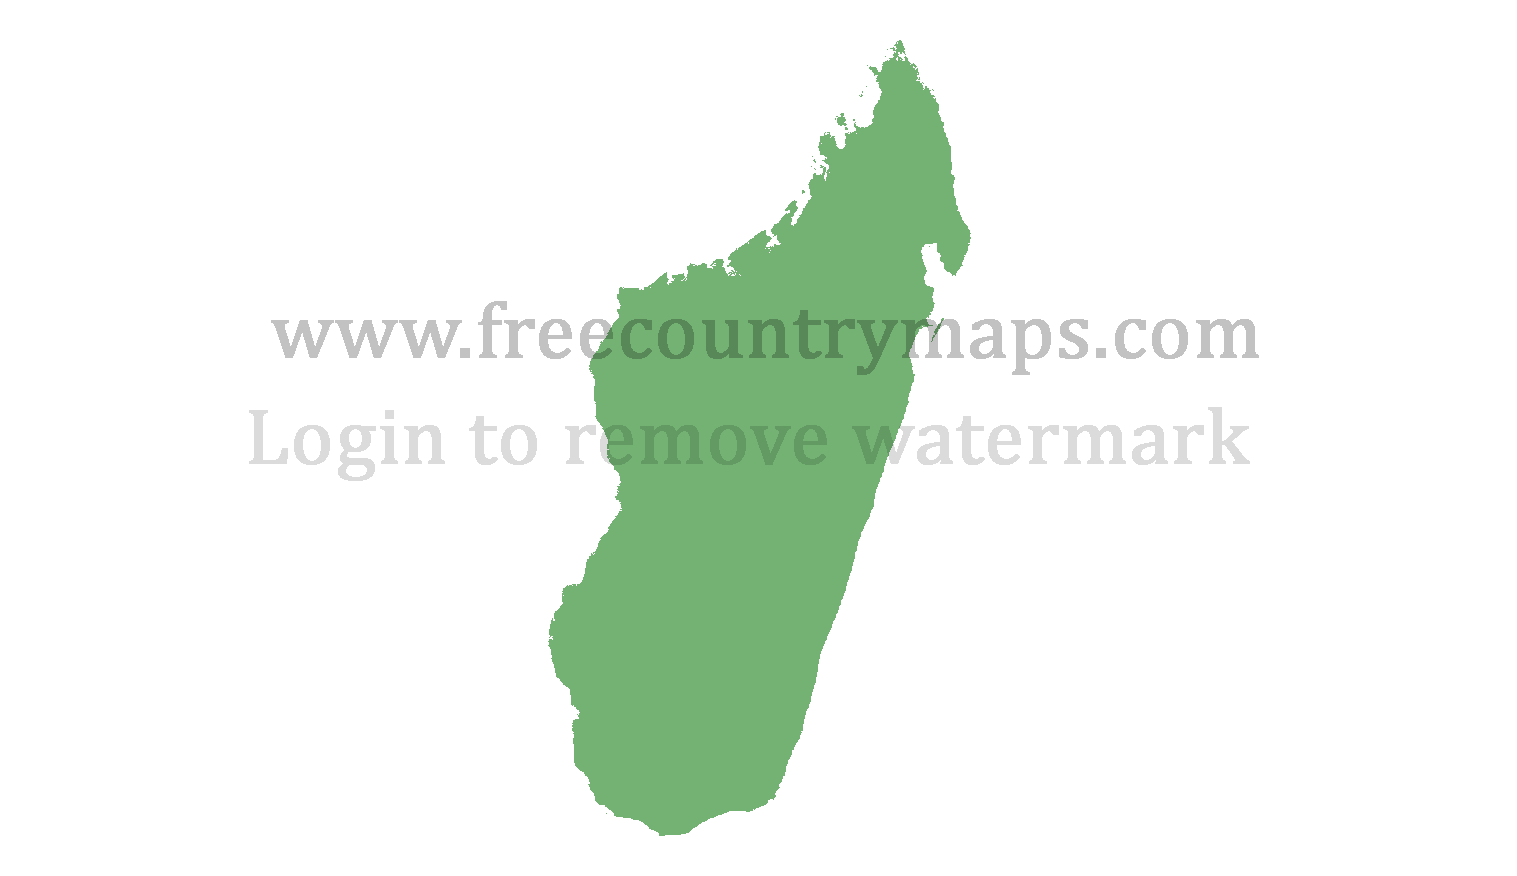 Blank Map of Madagascar